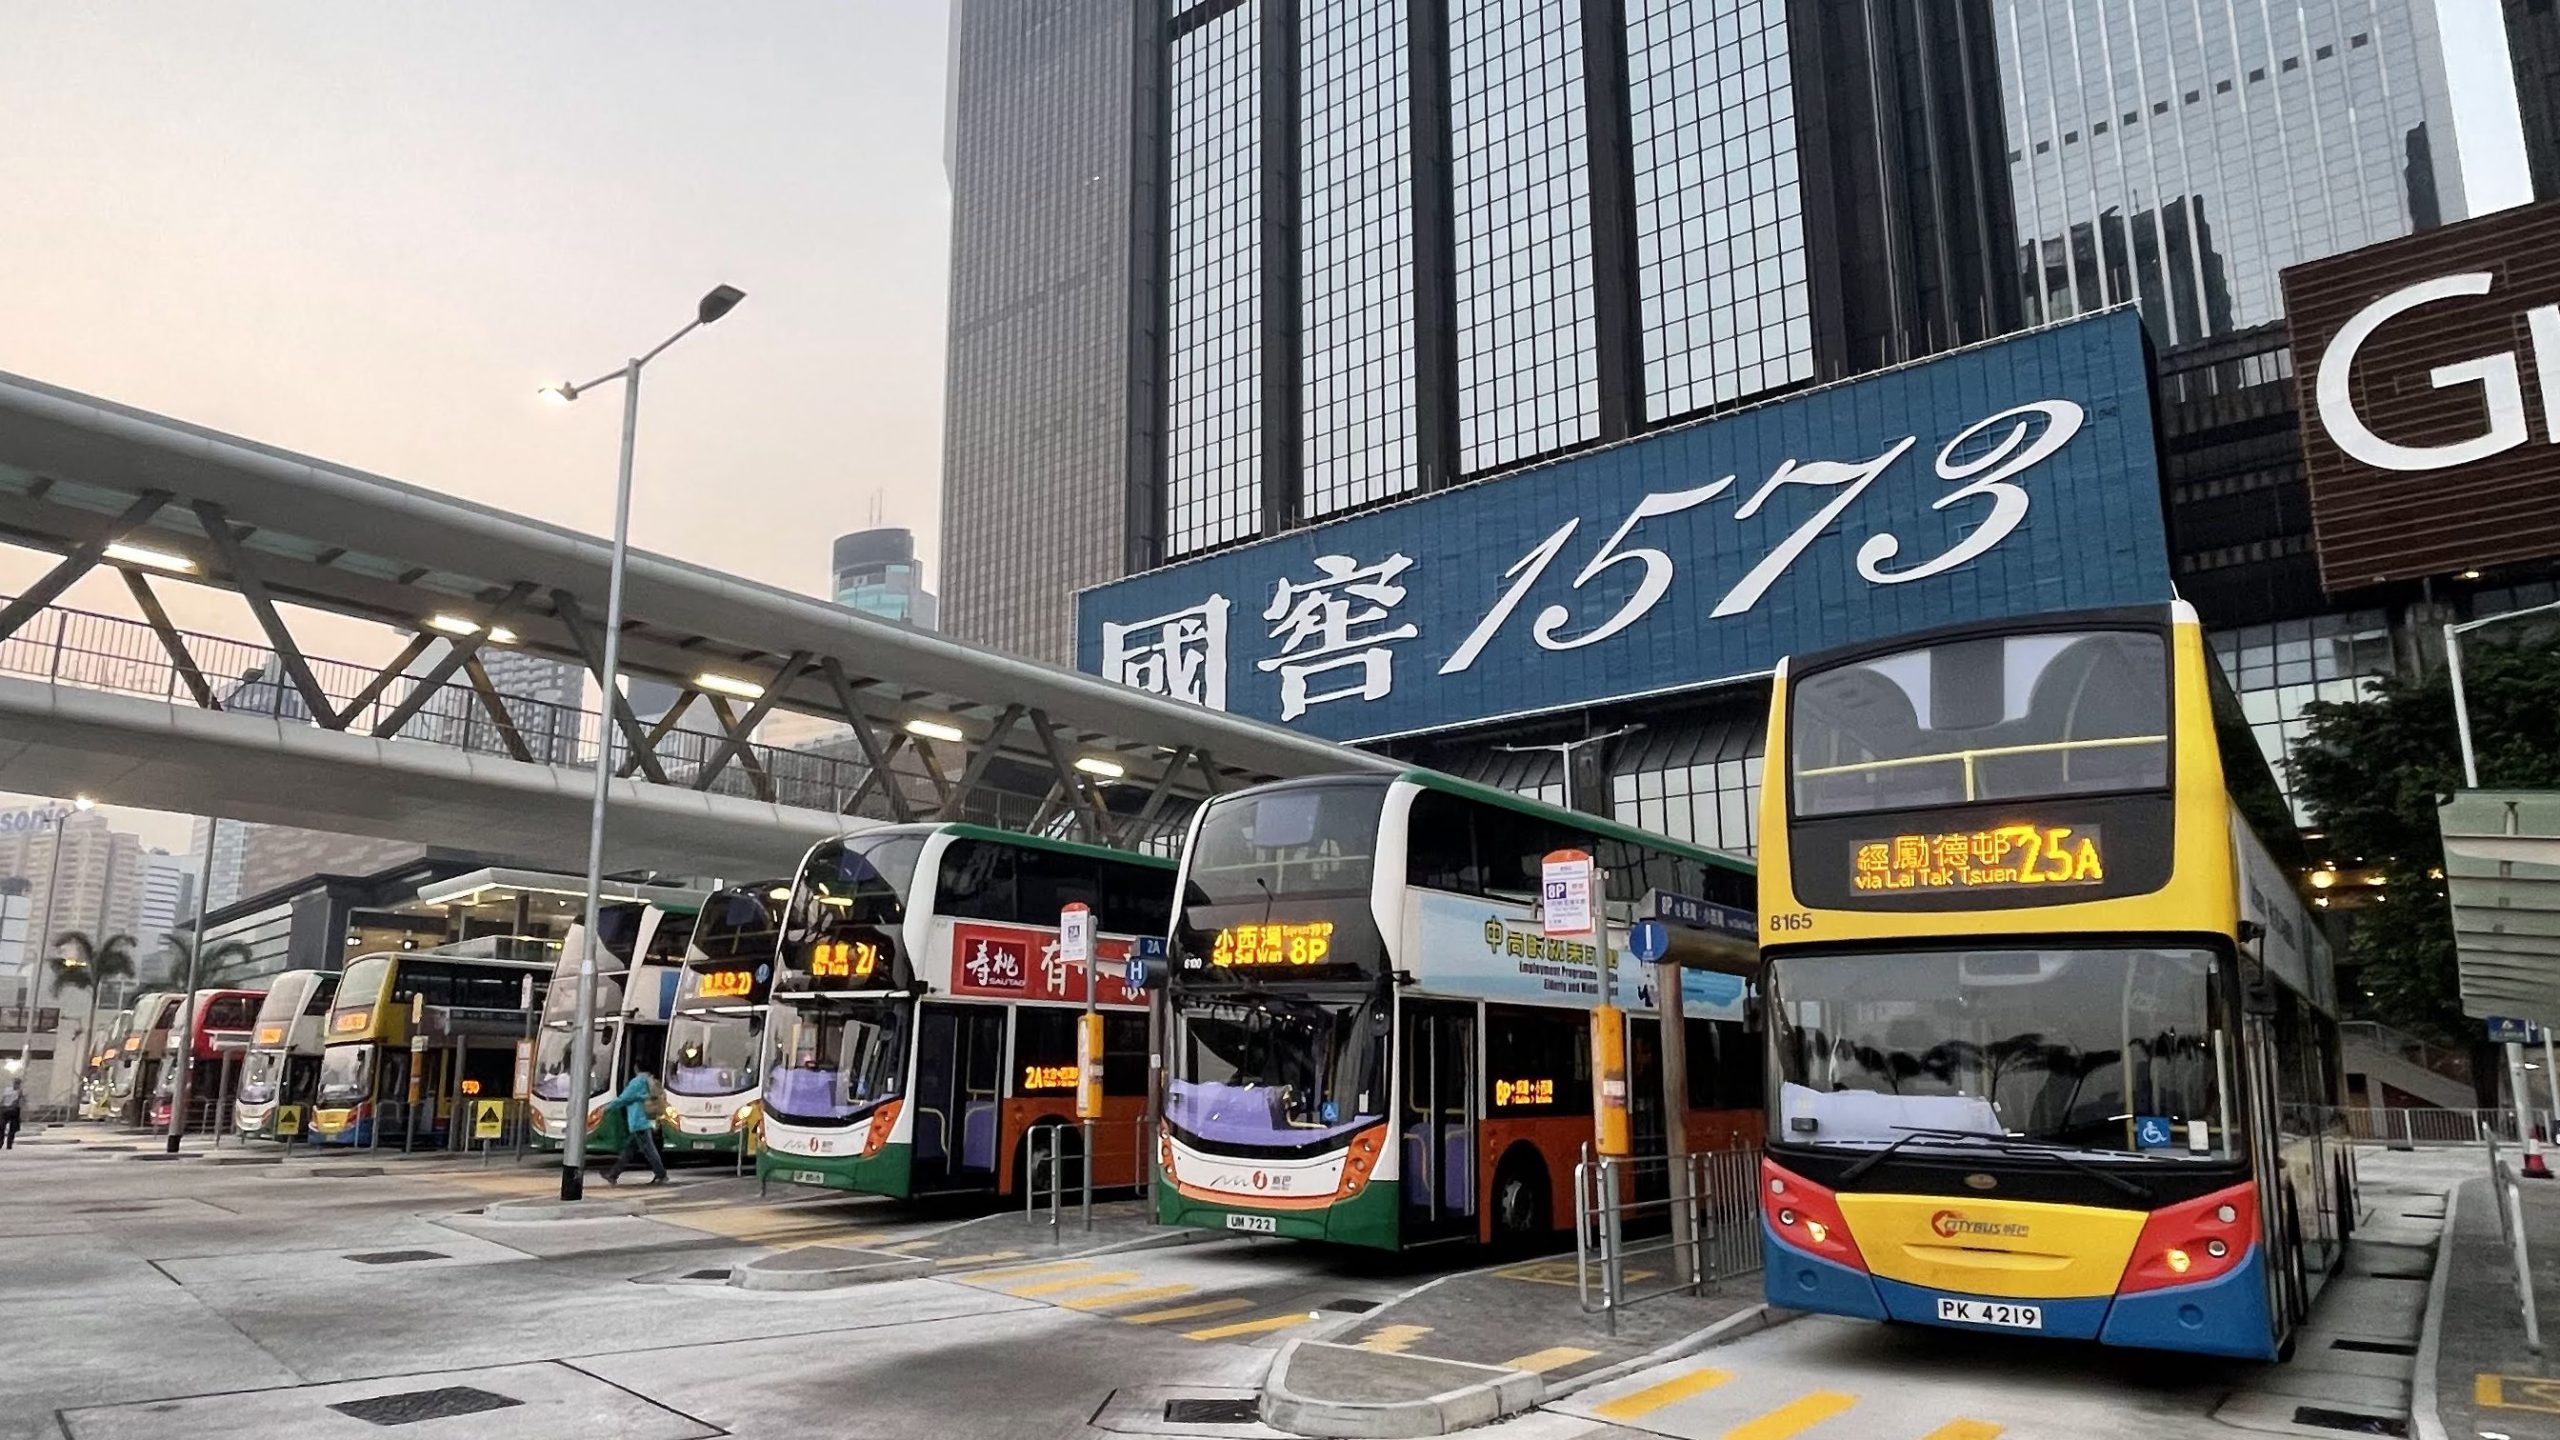 Buses in Wan Chai